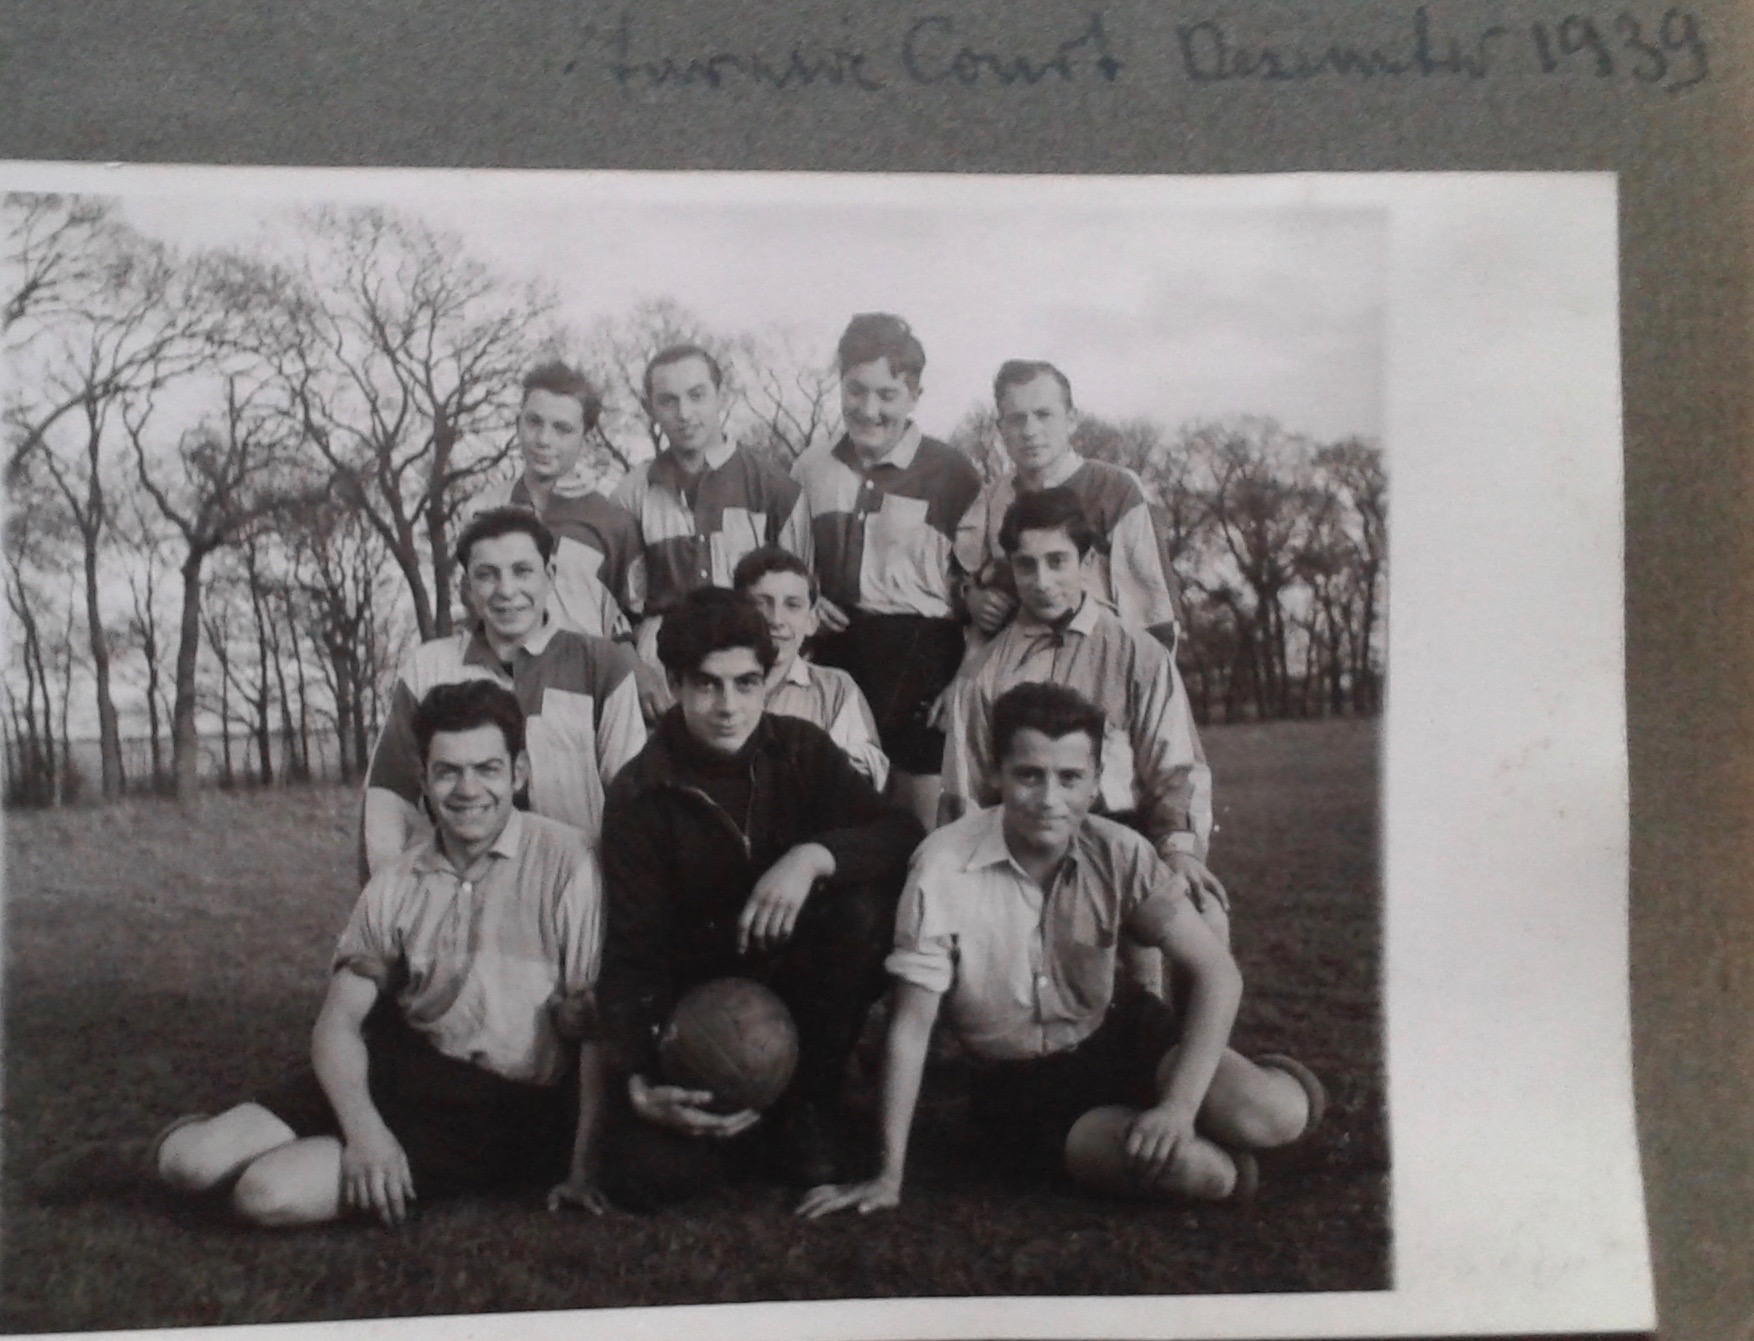 Kitchener camp, Horst Spies, Dovercourt Boys, Turner's Court, December 1939